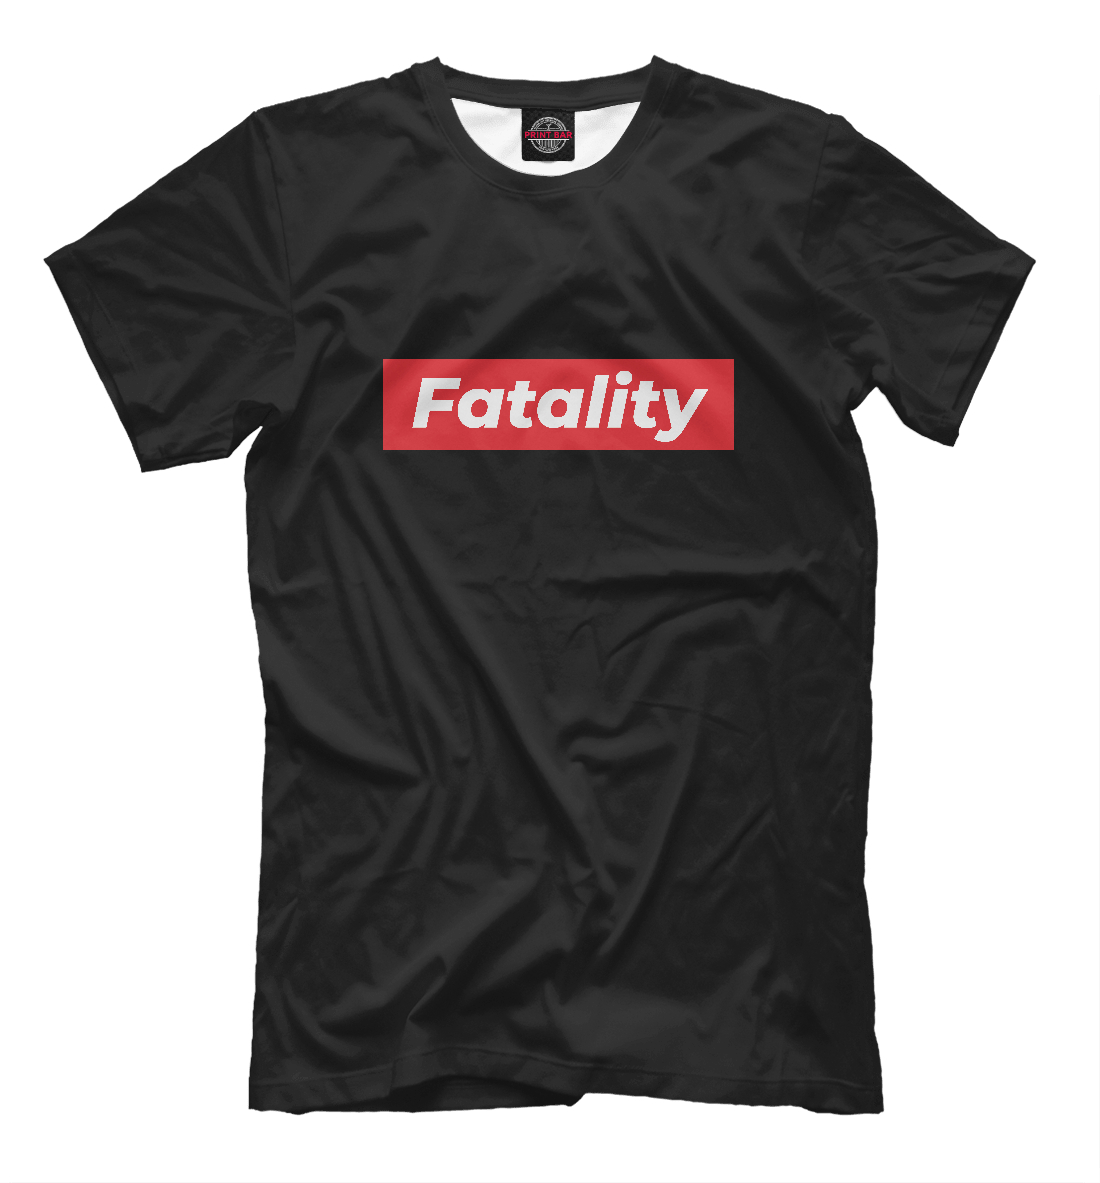 

Fatality